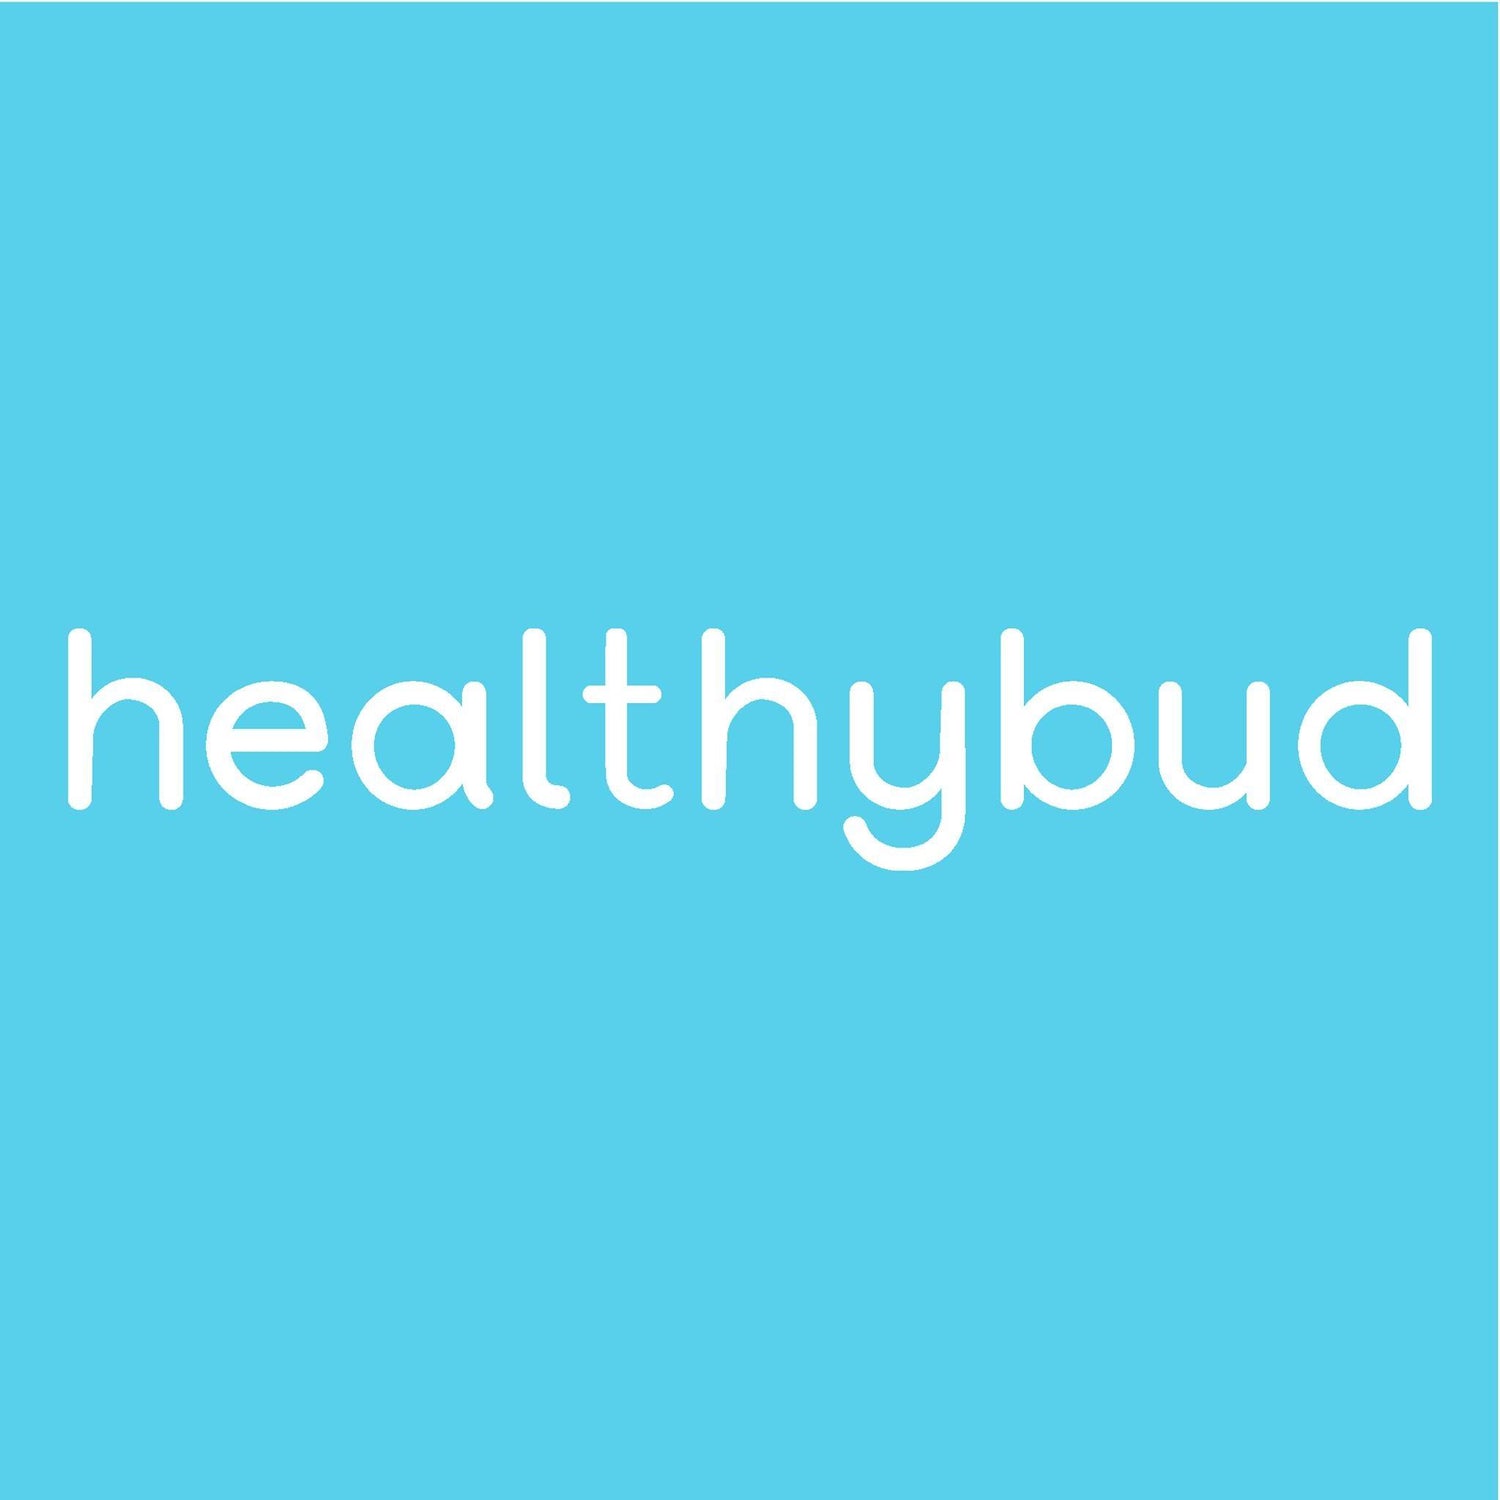 HealthyBud